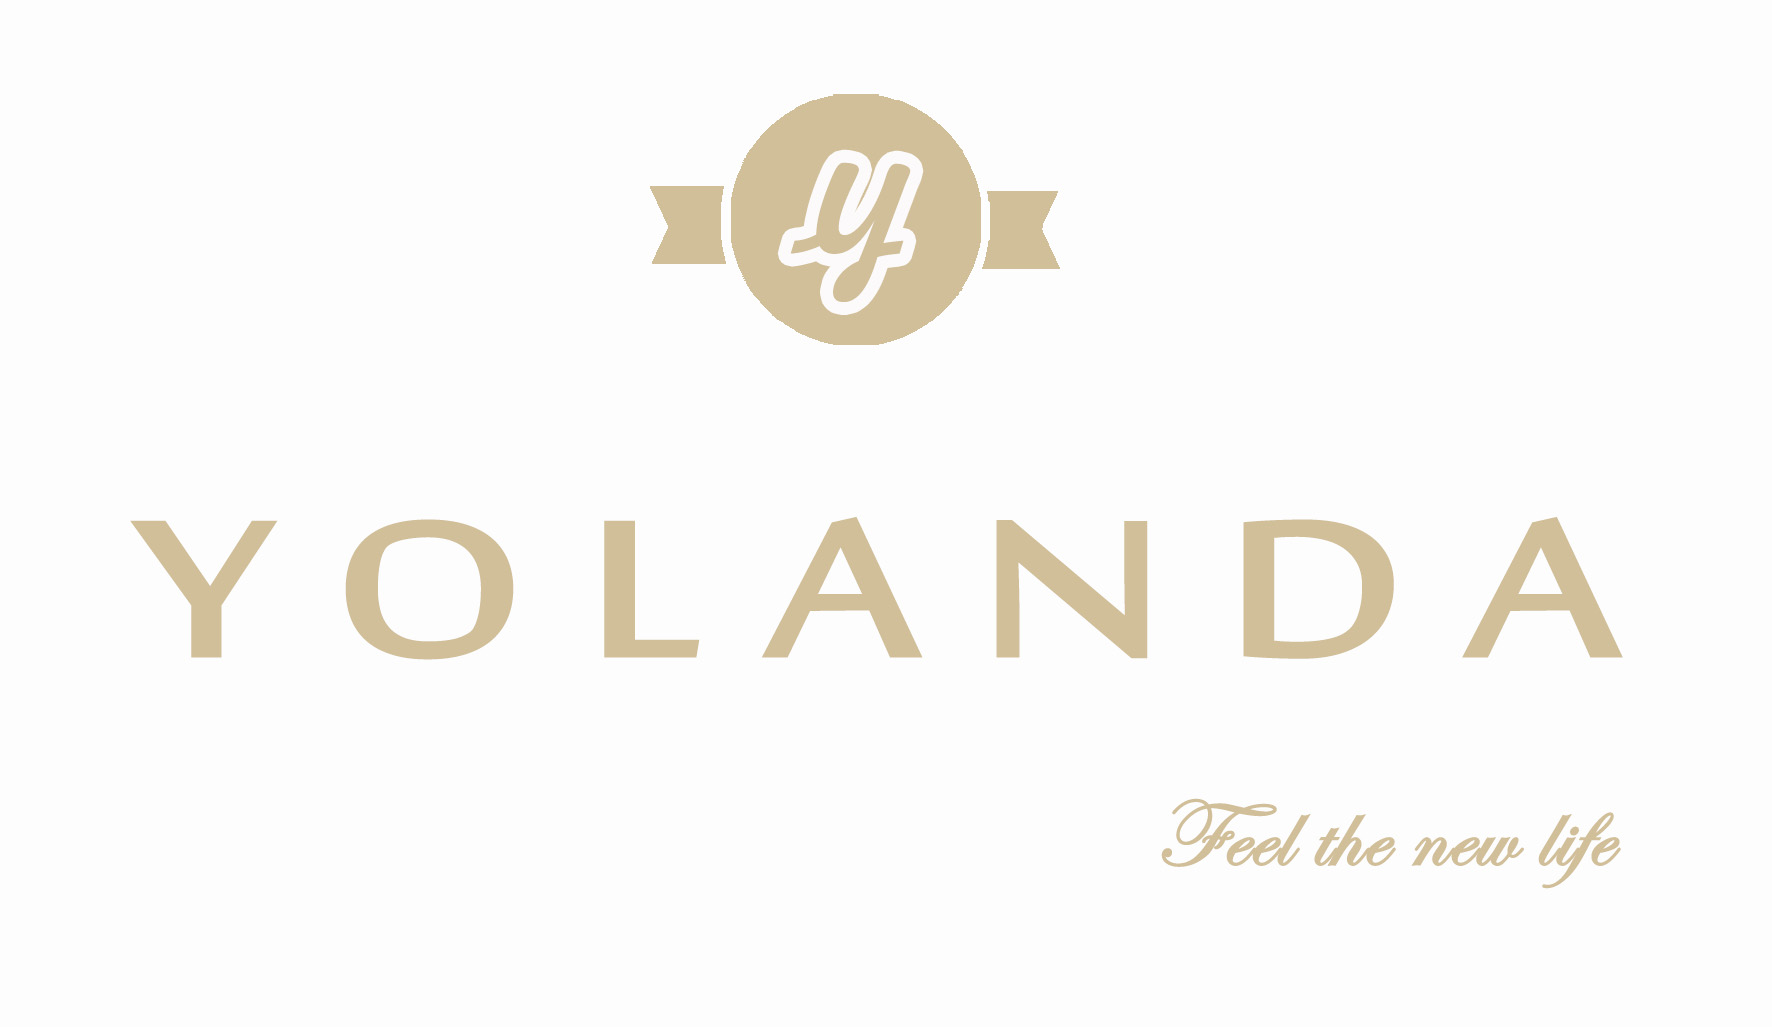 Yolanda Industrial Company Limited